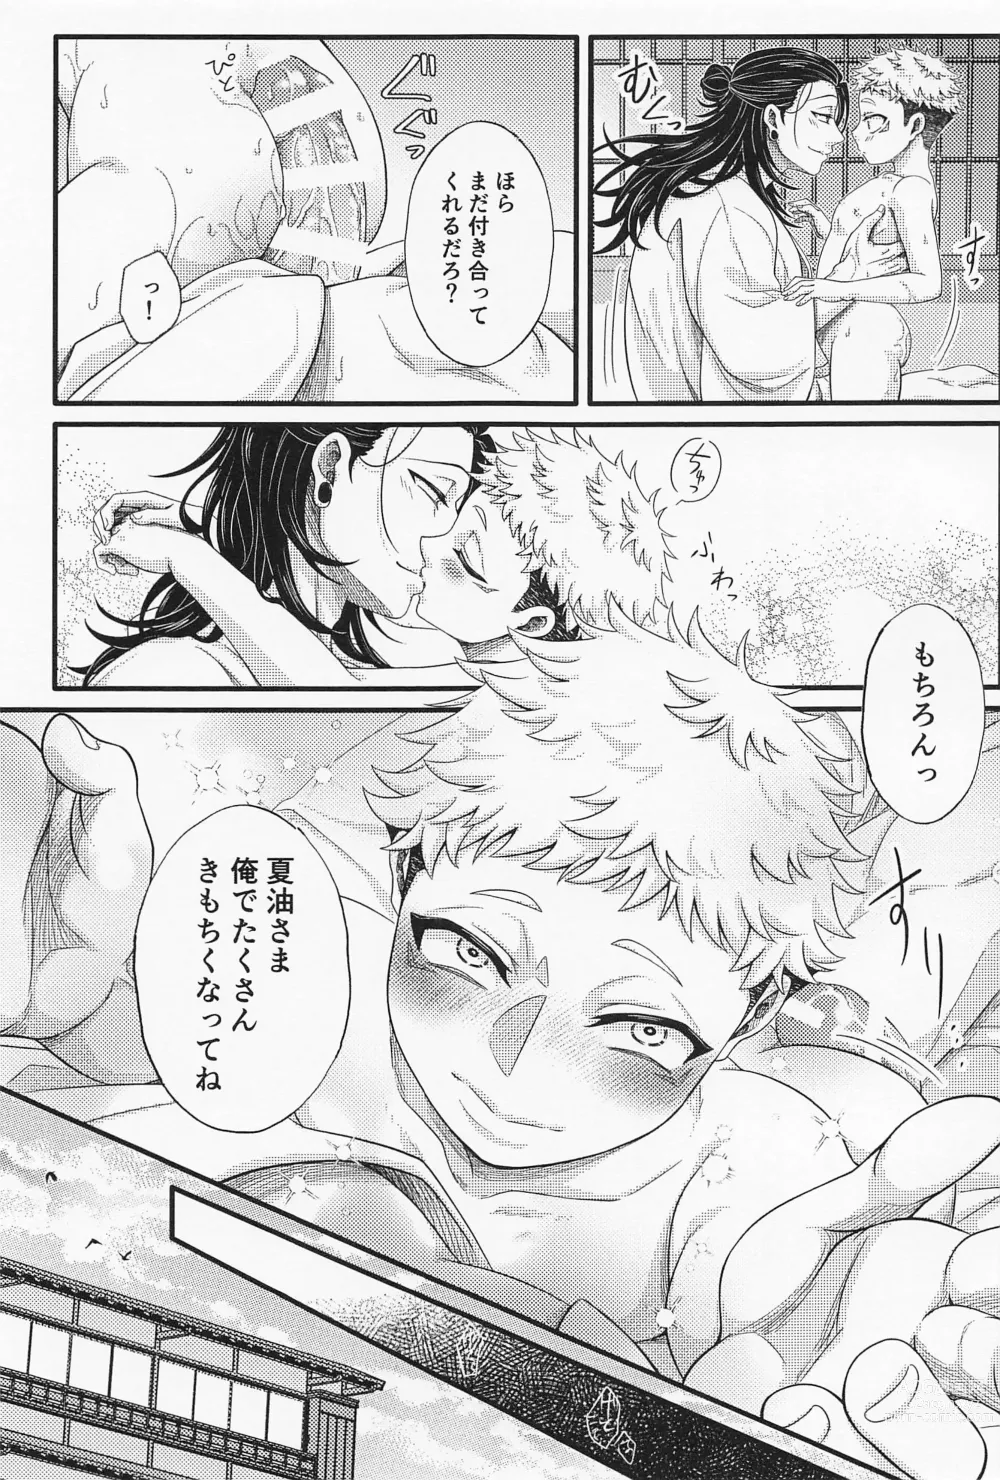 Page 16 of doujinshi Tamayura no.